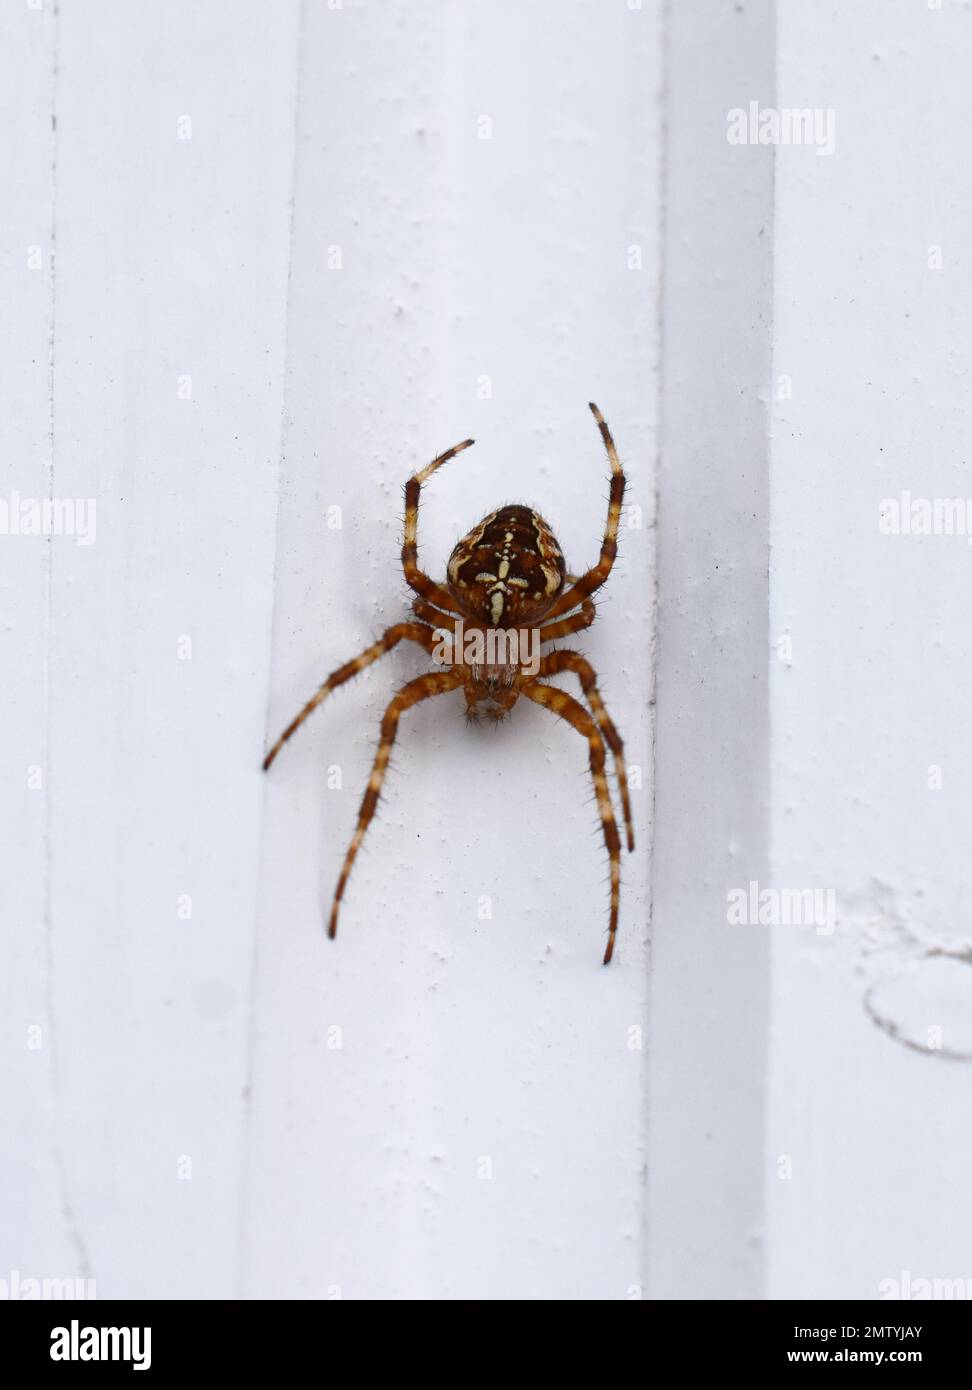 Spider giardino europeo Araneus diadematus di fronte a una parete bianca Foto Stock